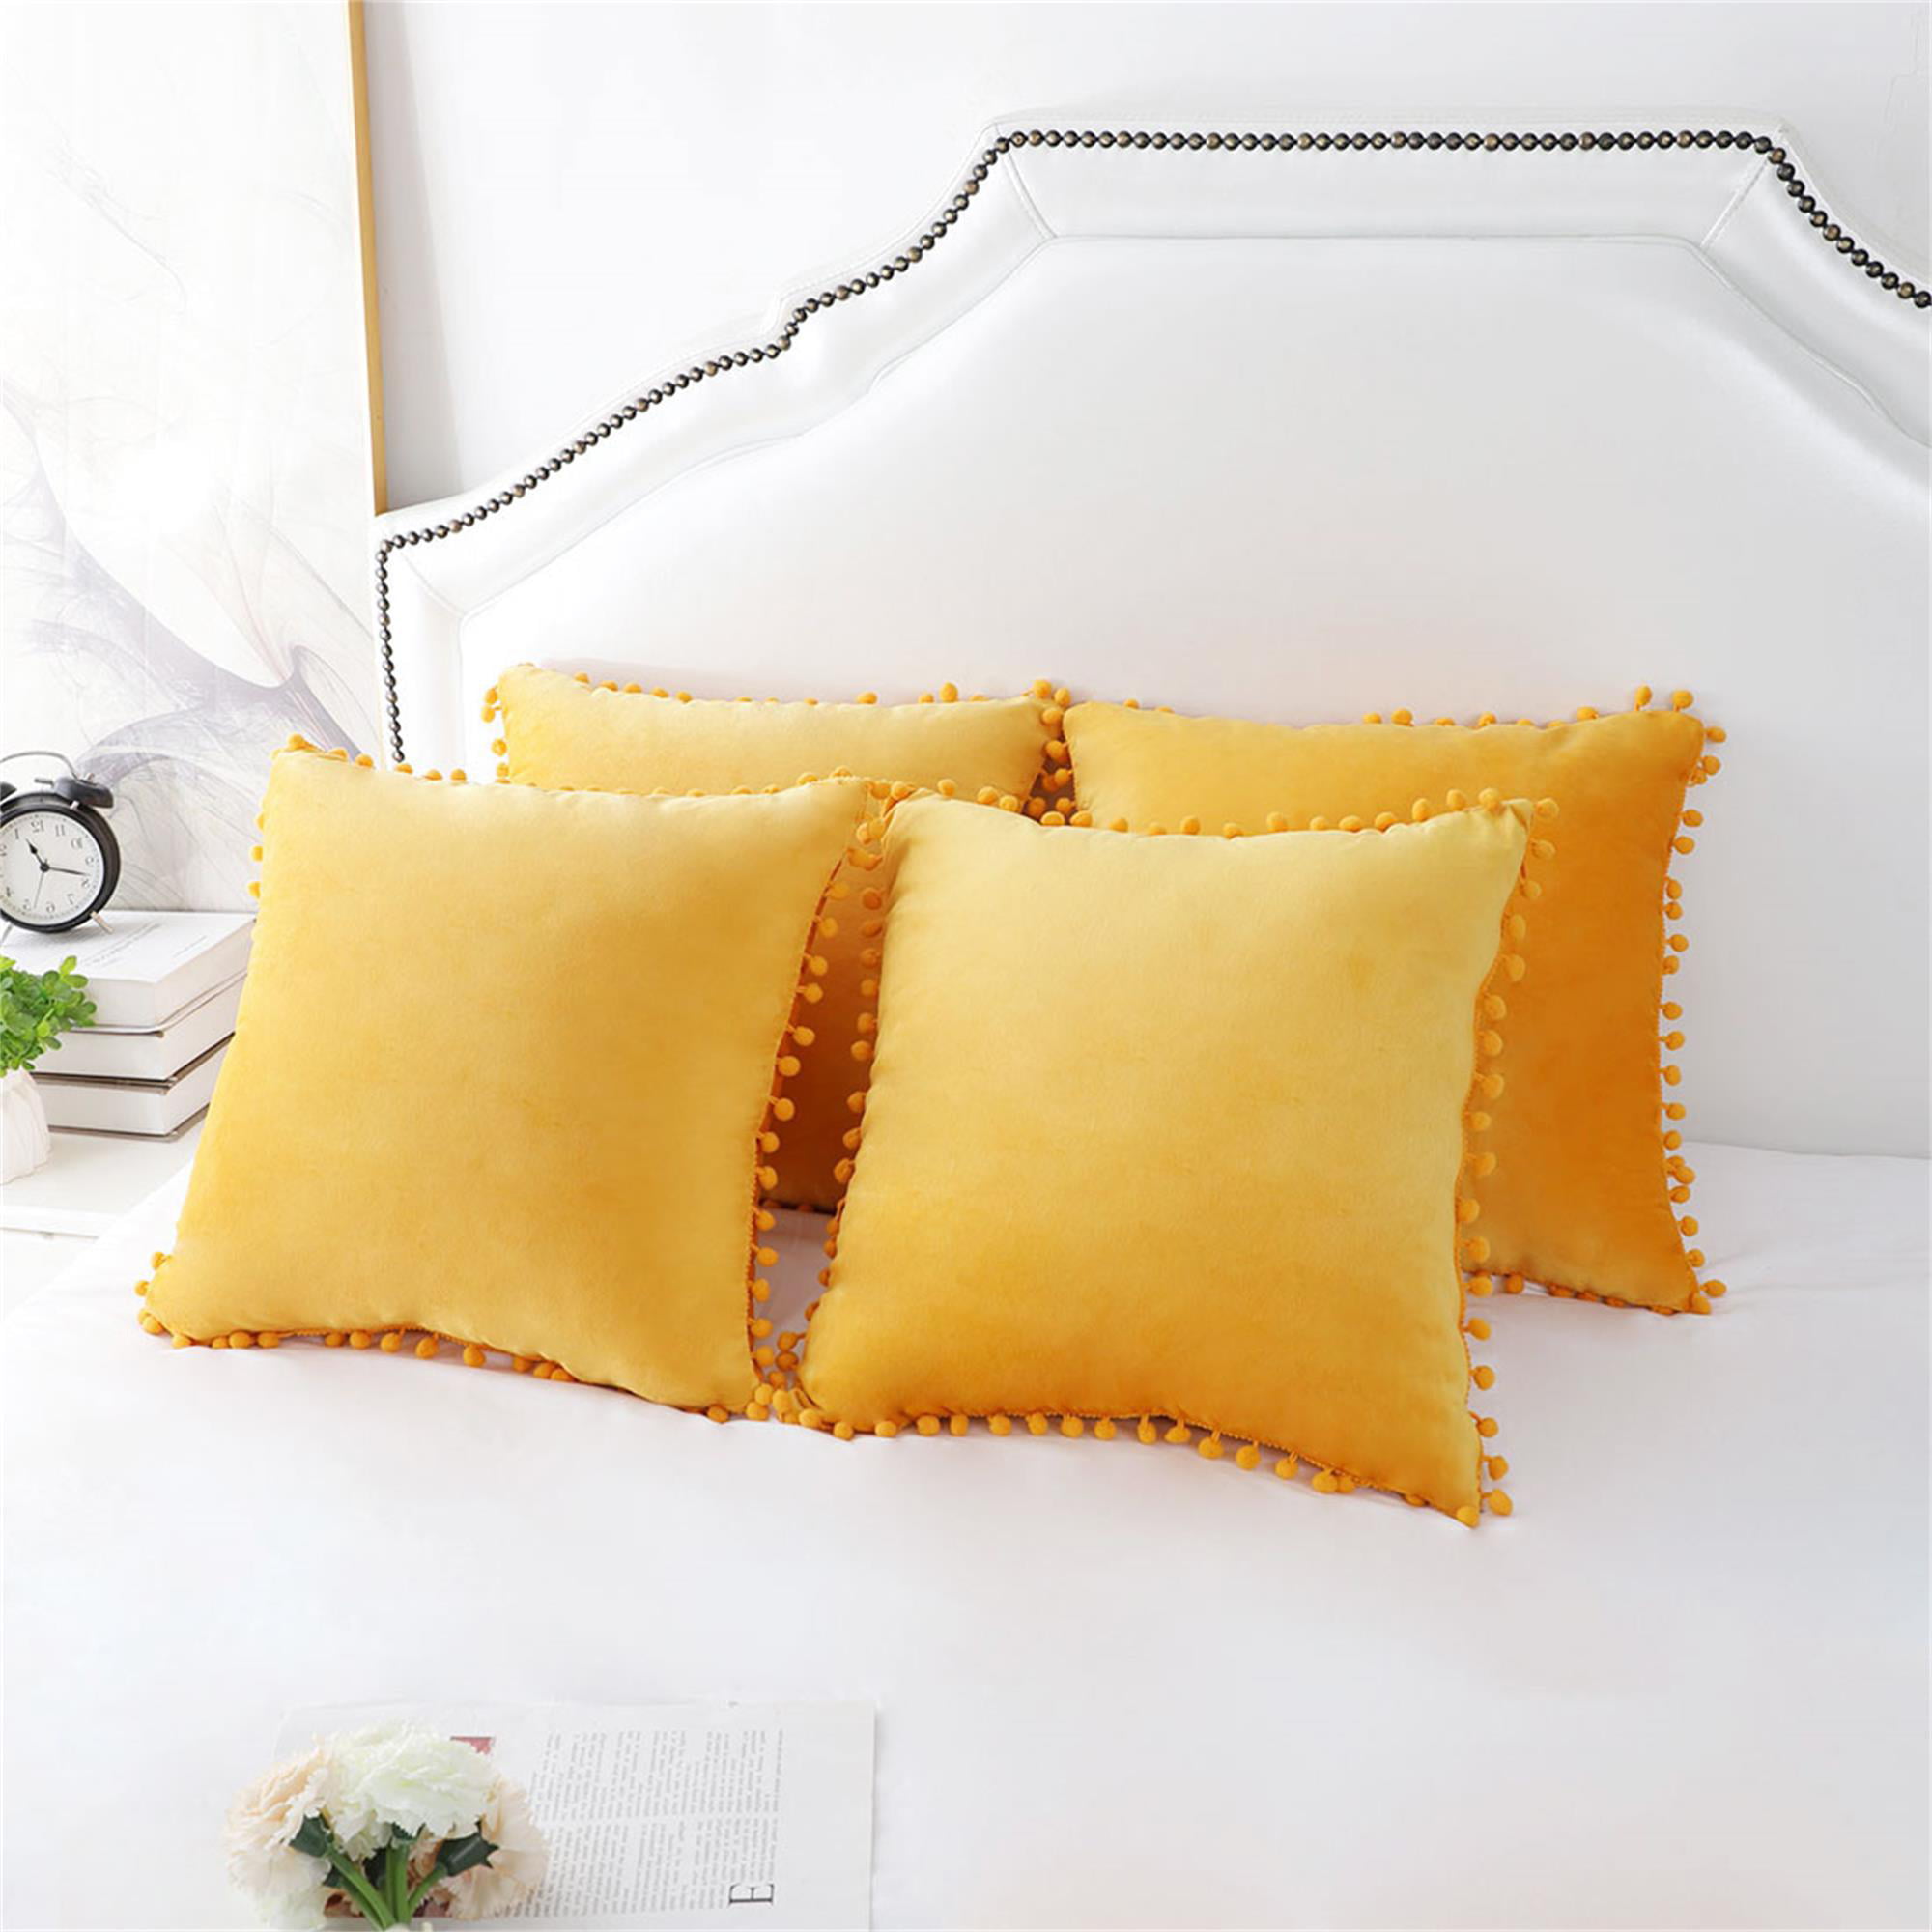 4 18 x 18 inch bright yellow velvet cushion covers. 